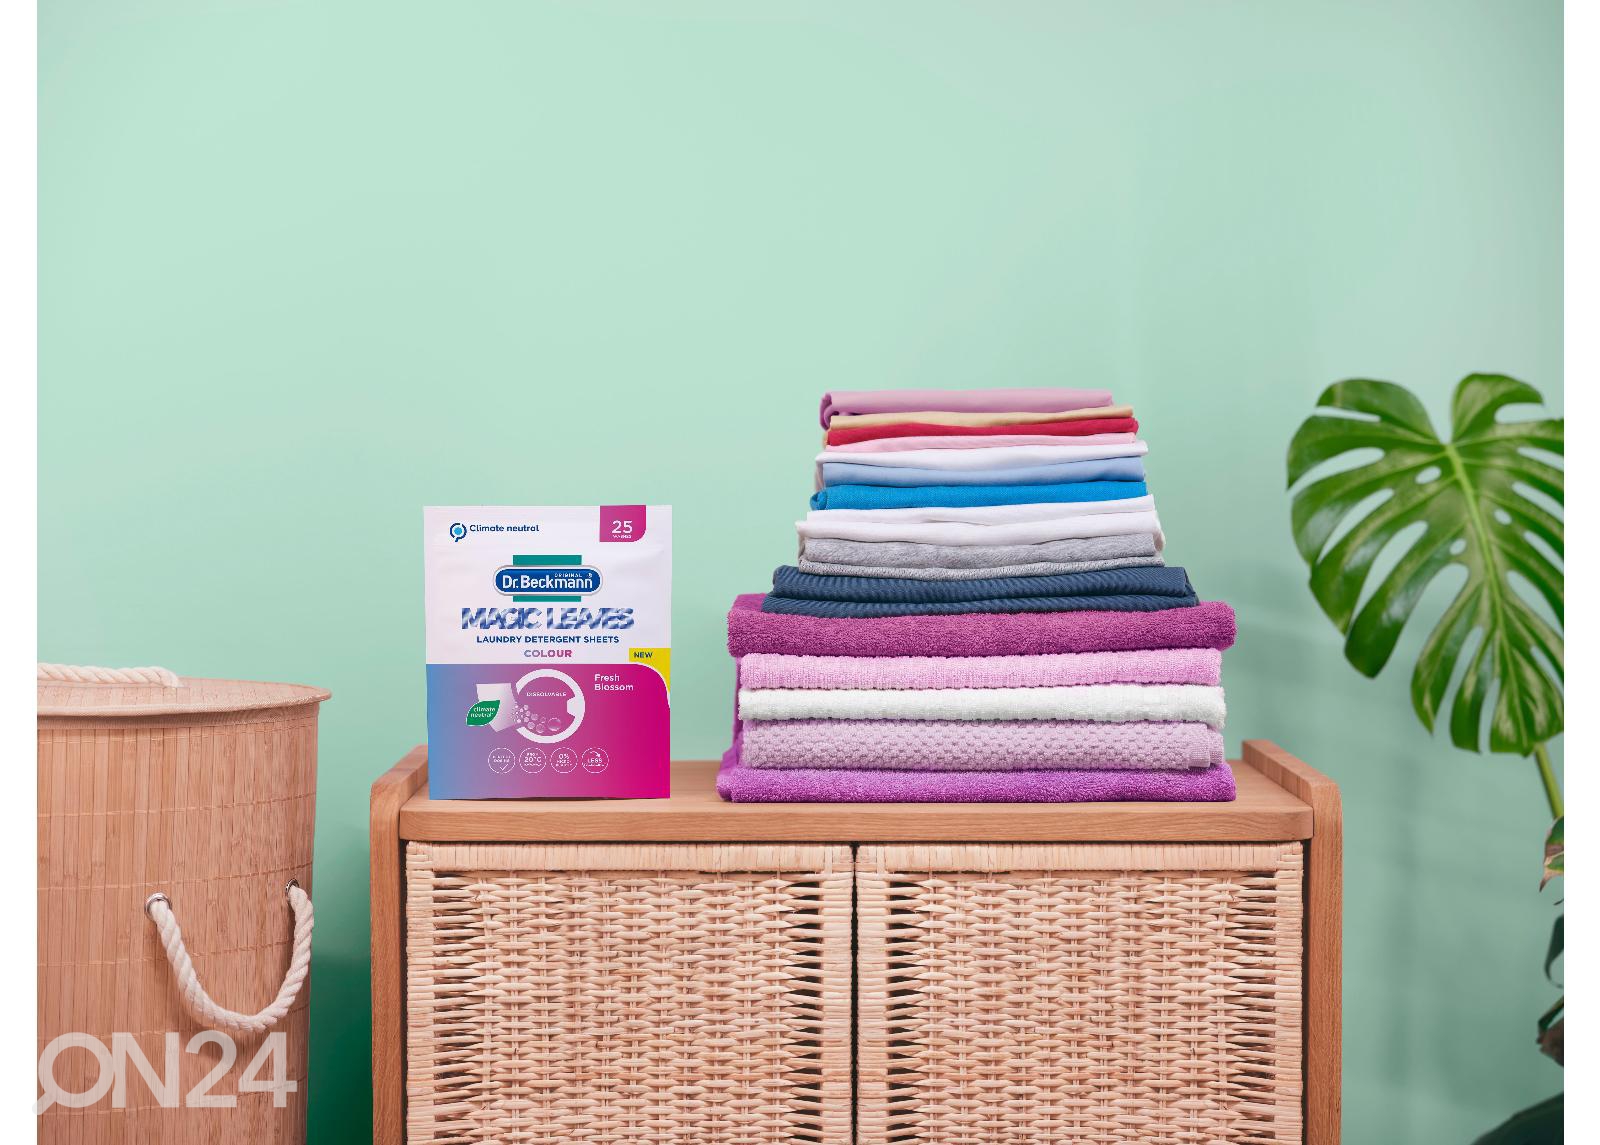 Dr. Beckmann Magic Leaves Laundry Detergent Sheets Color